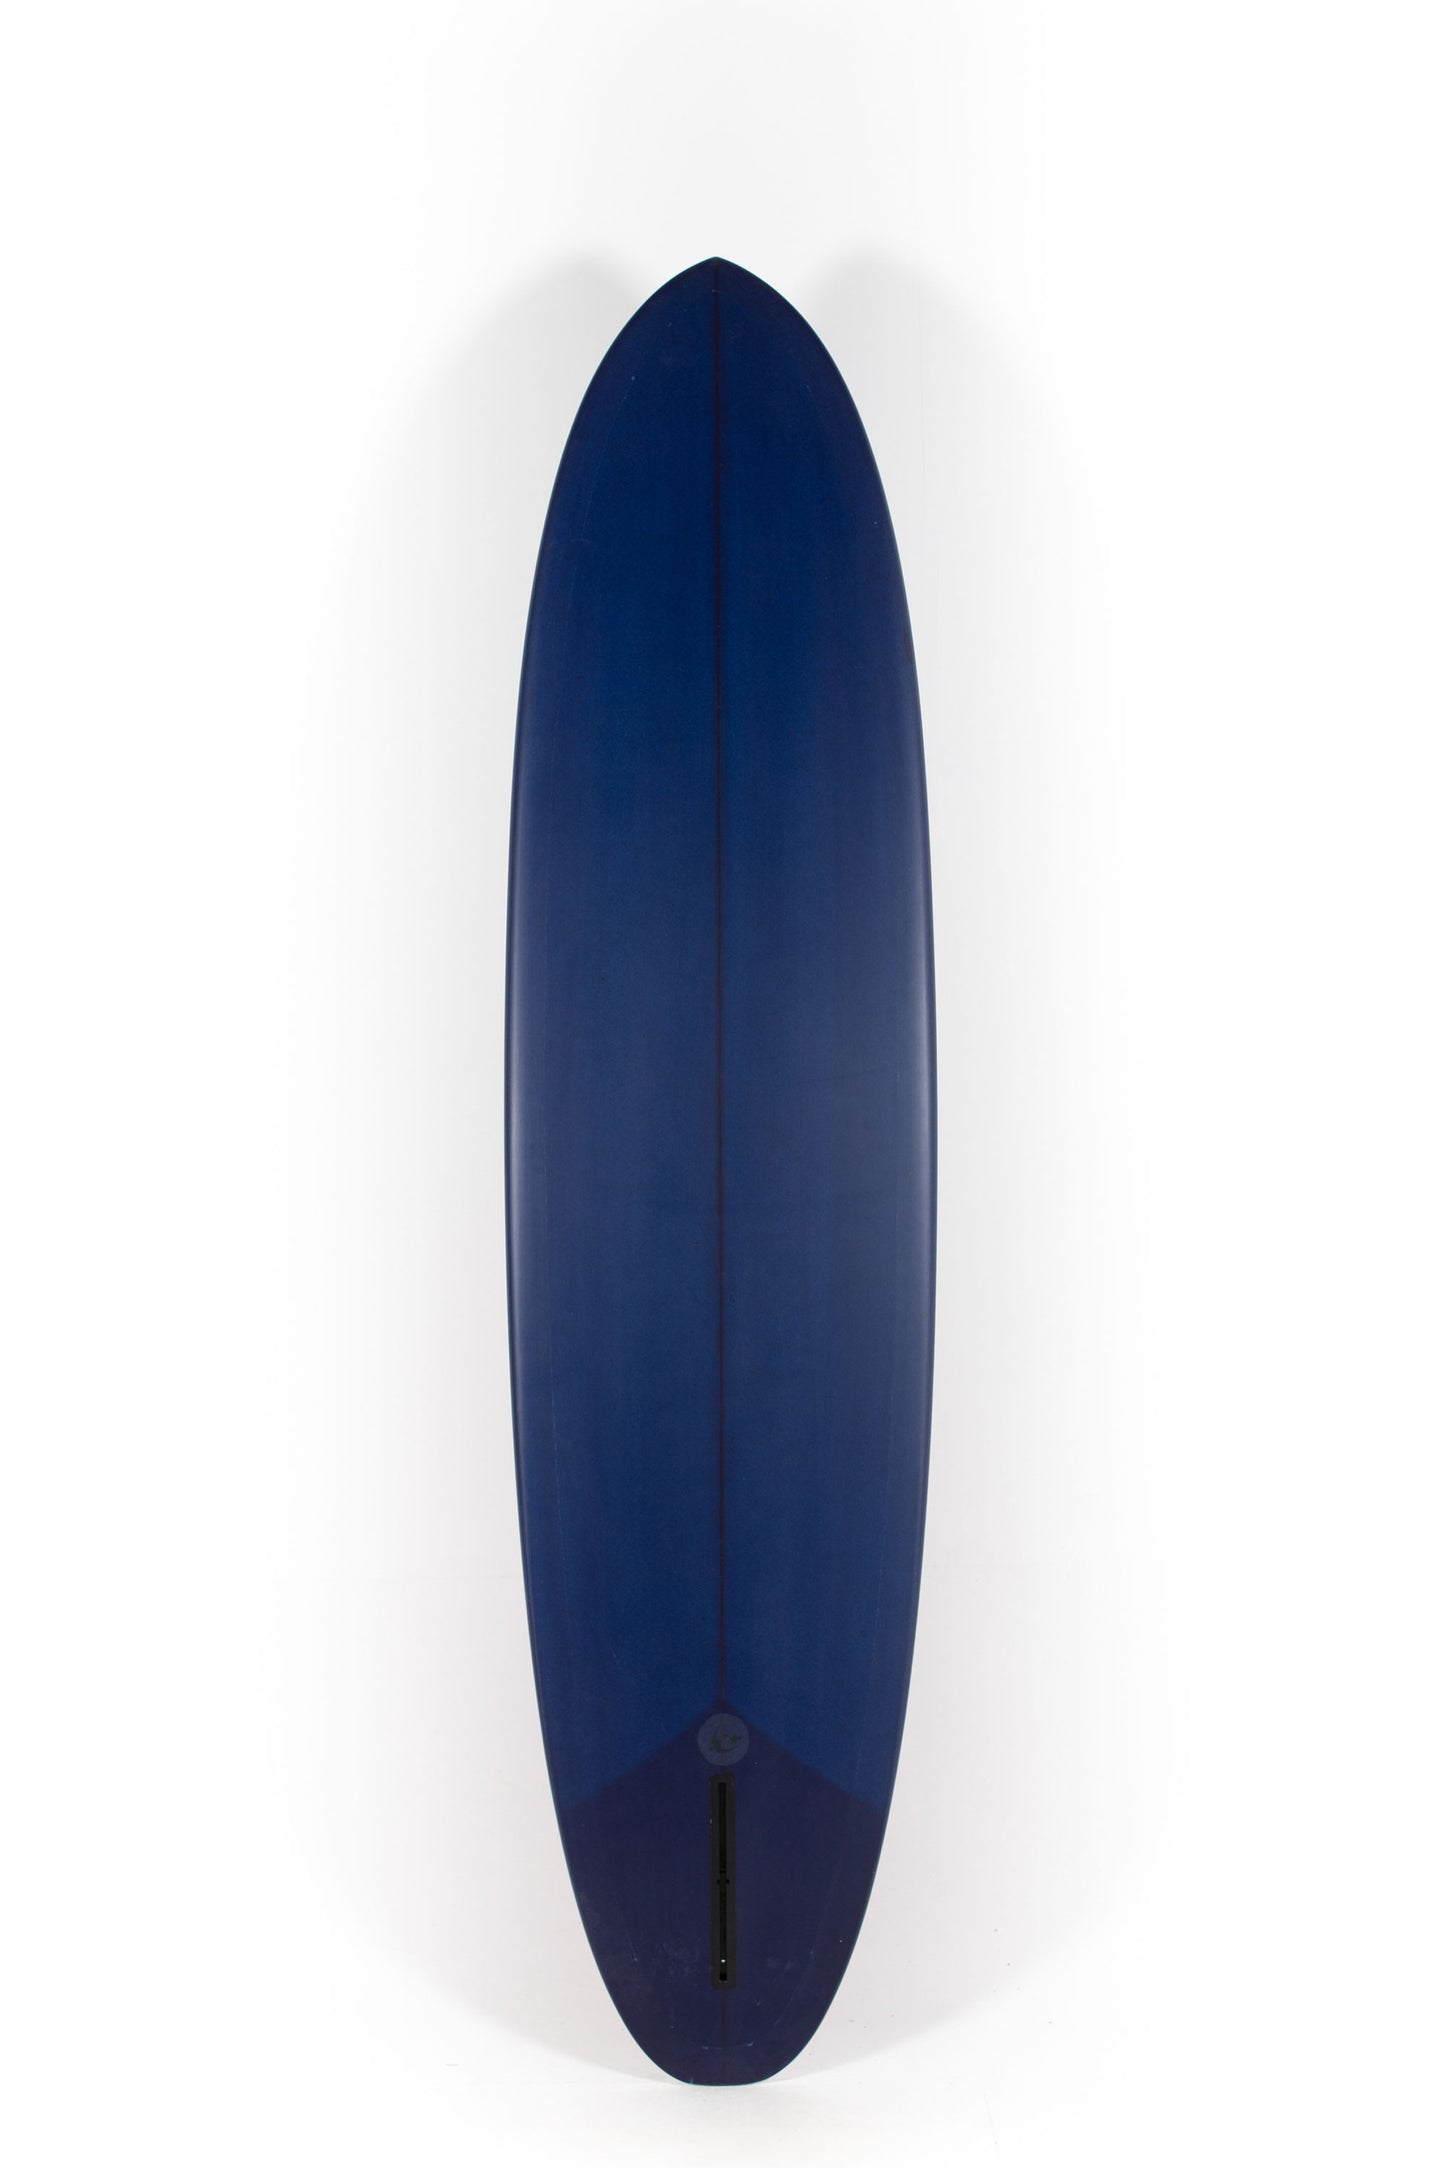 Pukas Surf Shop - McTavish Surfboard - RINCON by Bob McTavish - 7’10” x 21 3/4 x 3 - Ref BM00787